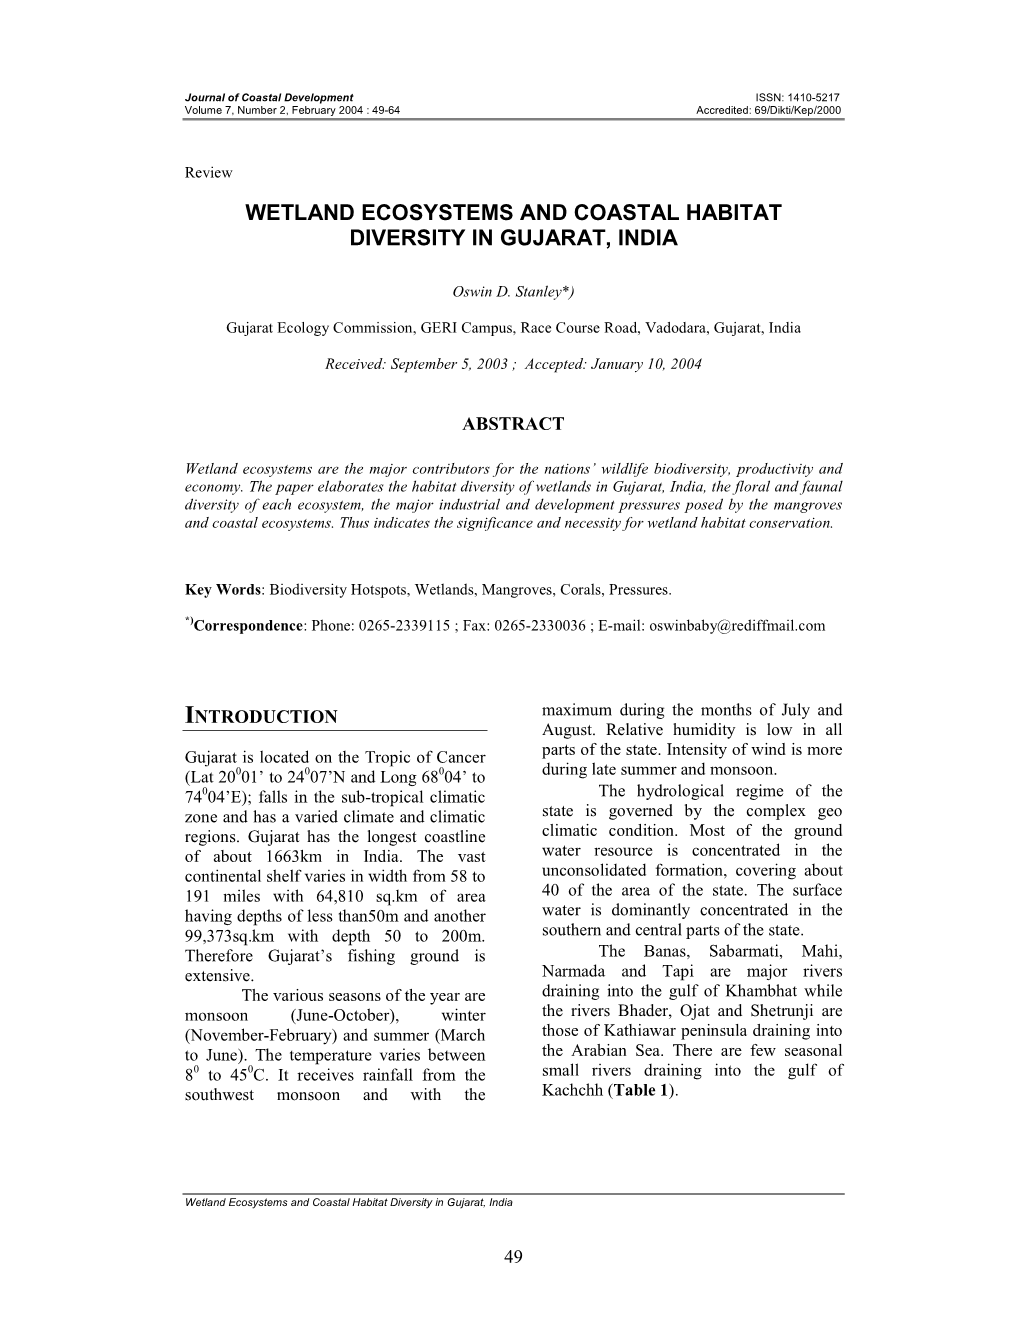 Wetland Ecosystems and Coastal Habitat Diversity in Gujarat, India